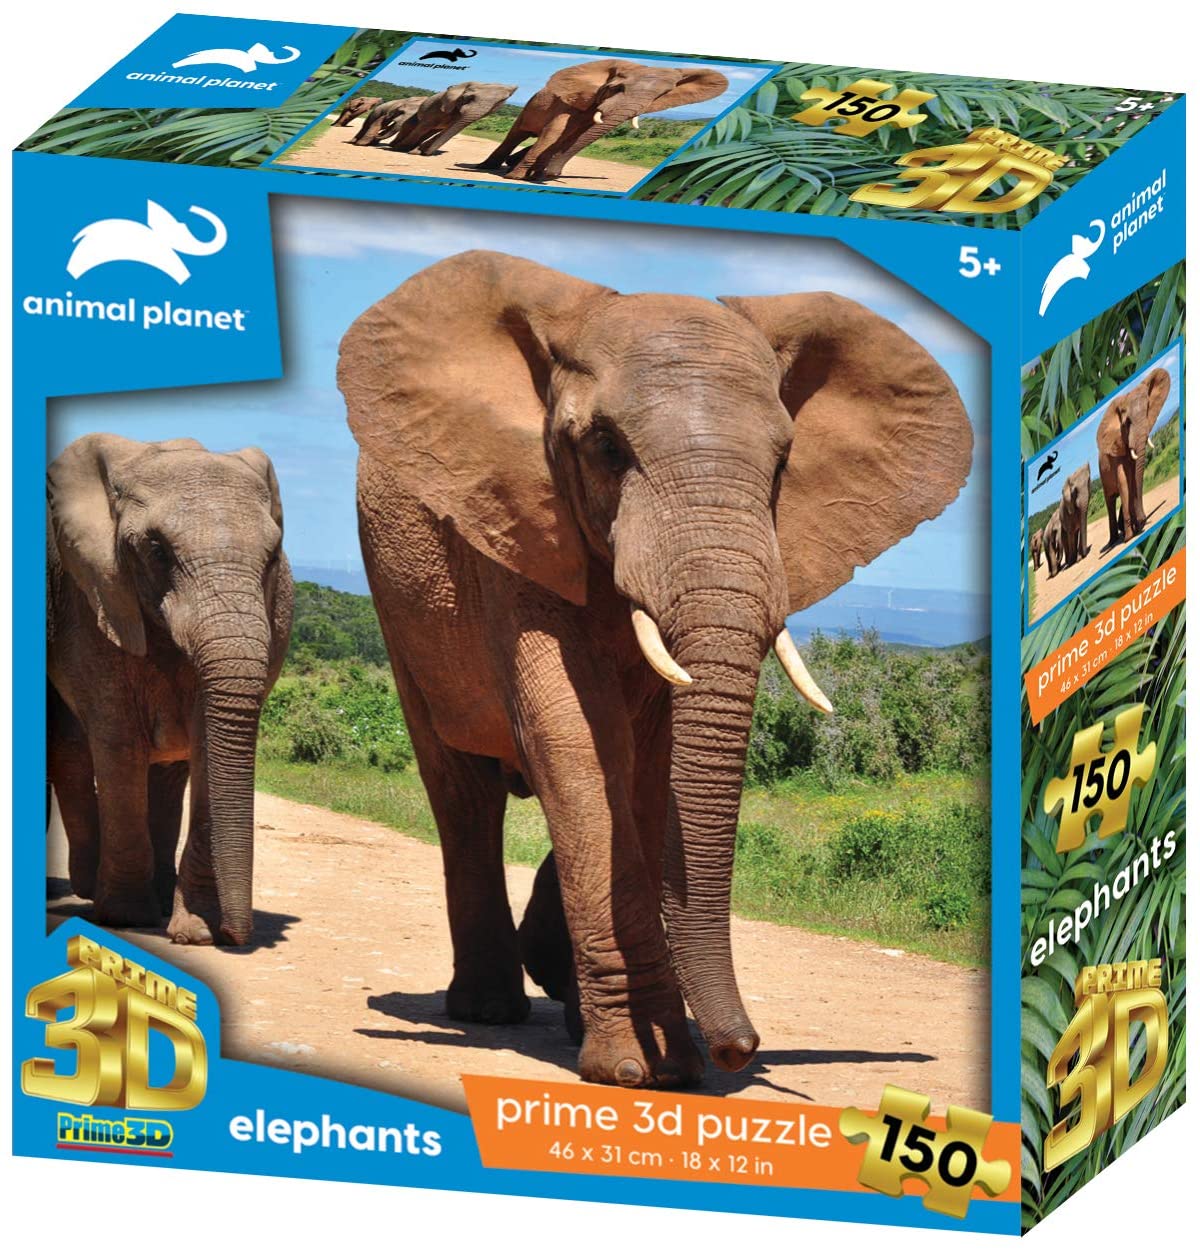 Elephants 150 Piece 3D Jigsaw Puzzle